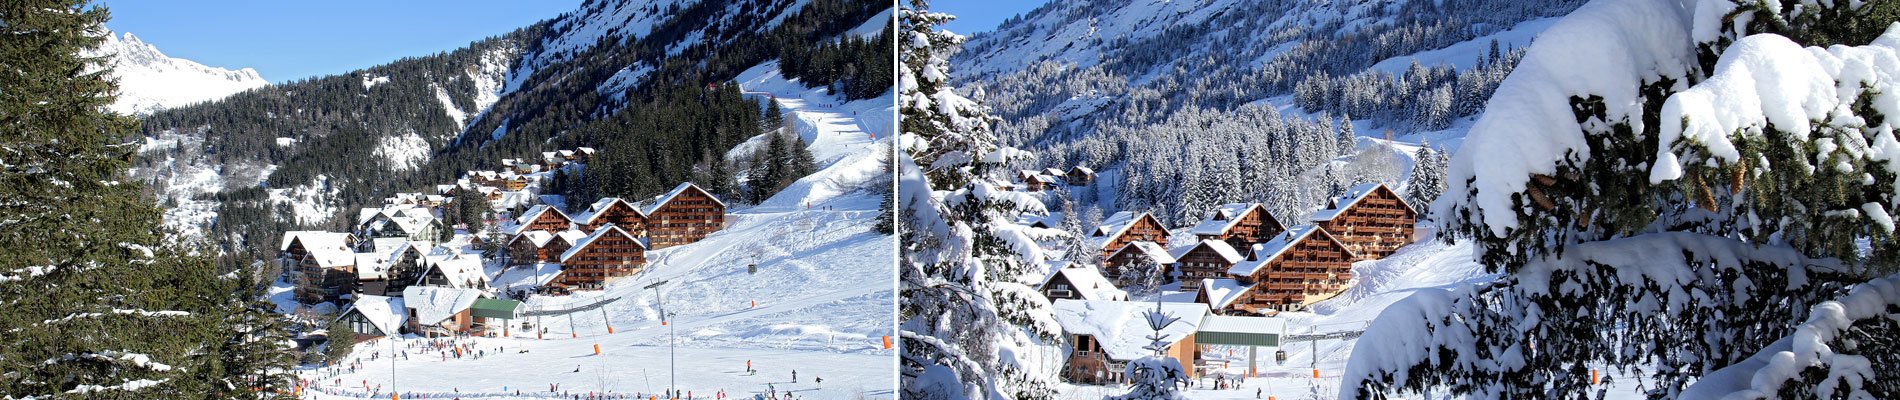 	 chalet-des-neiges-oz-en-oisans-alpe-d-huez-wintersport